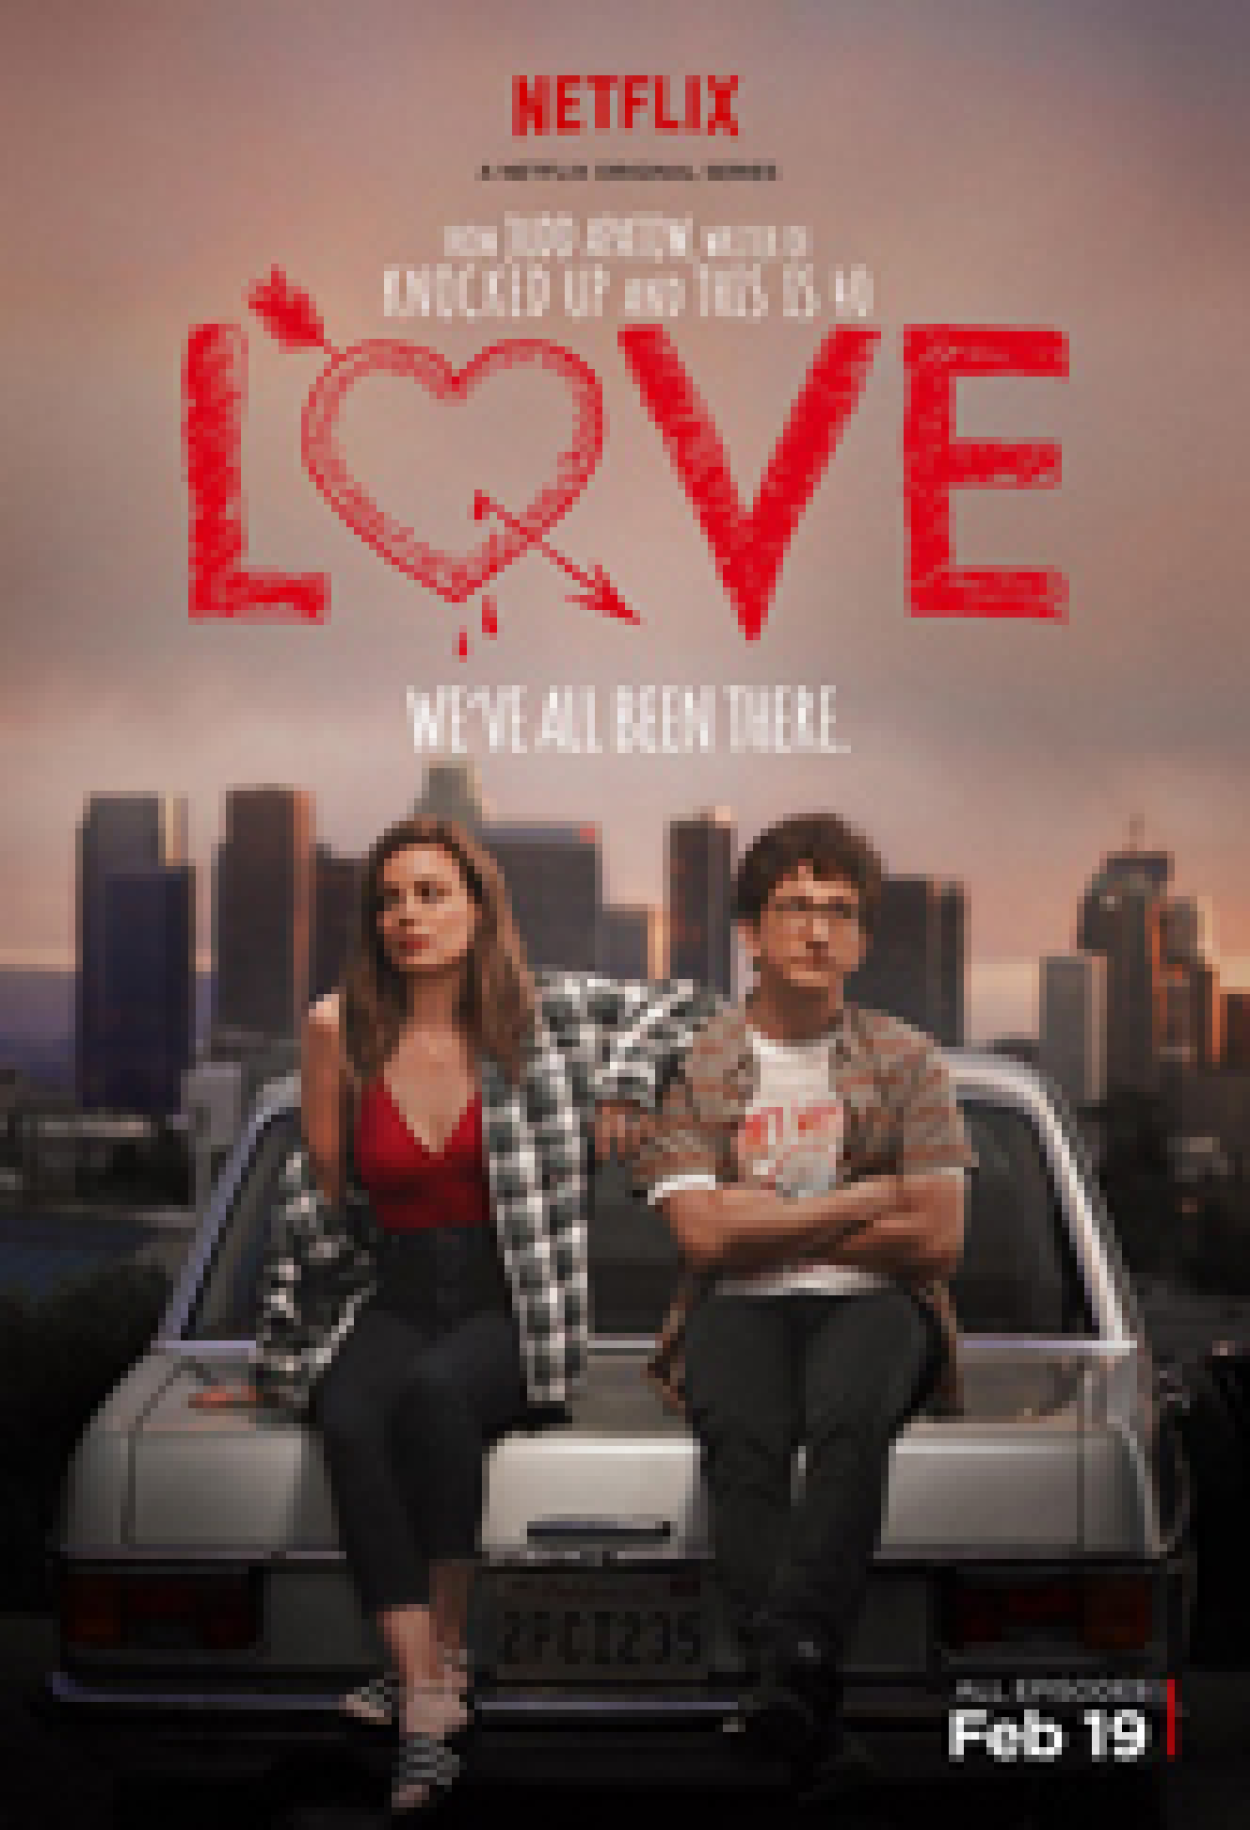 Love All Play (Série), Sinopse, Trailers e Curiosidades - Cinema10